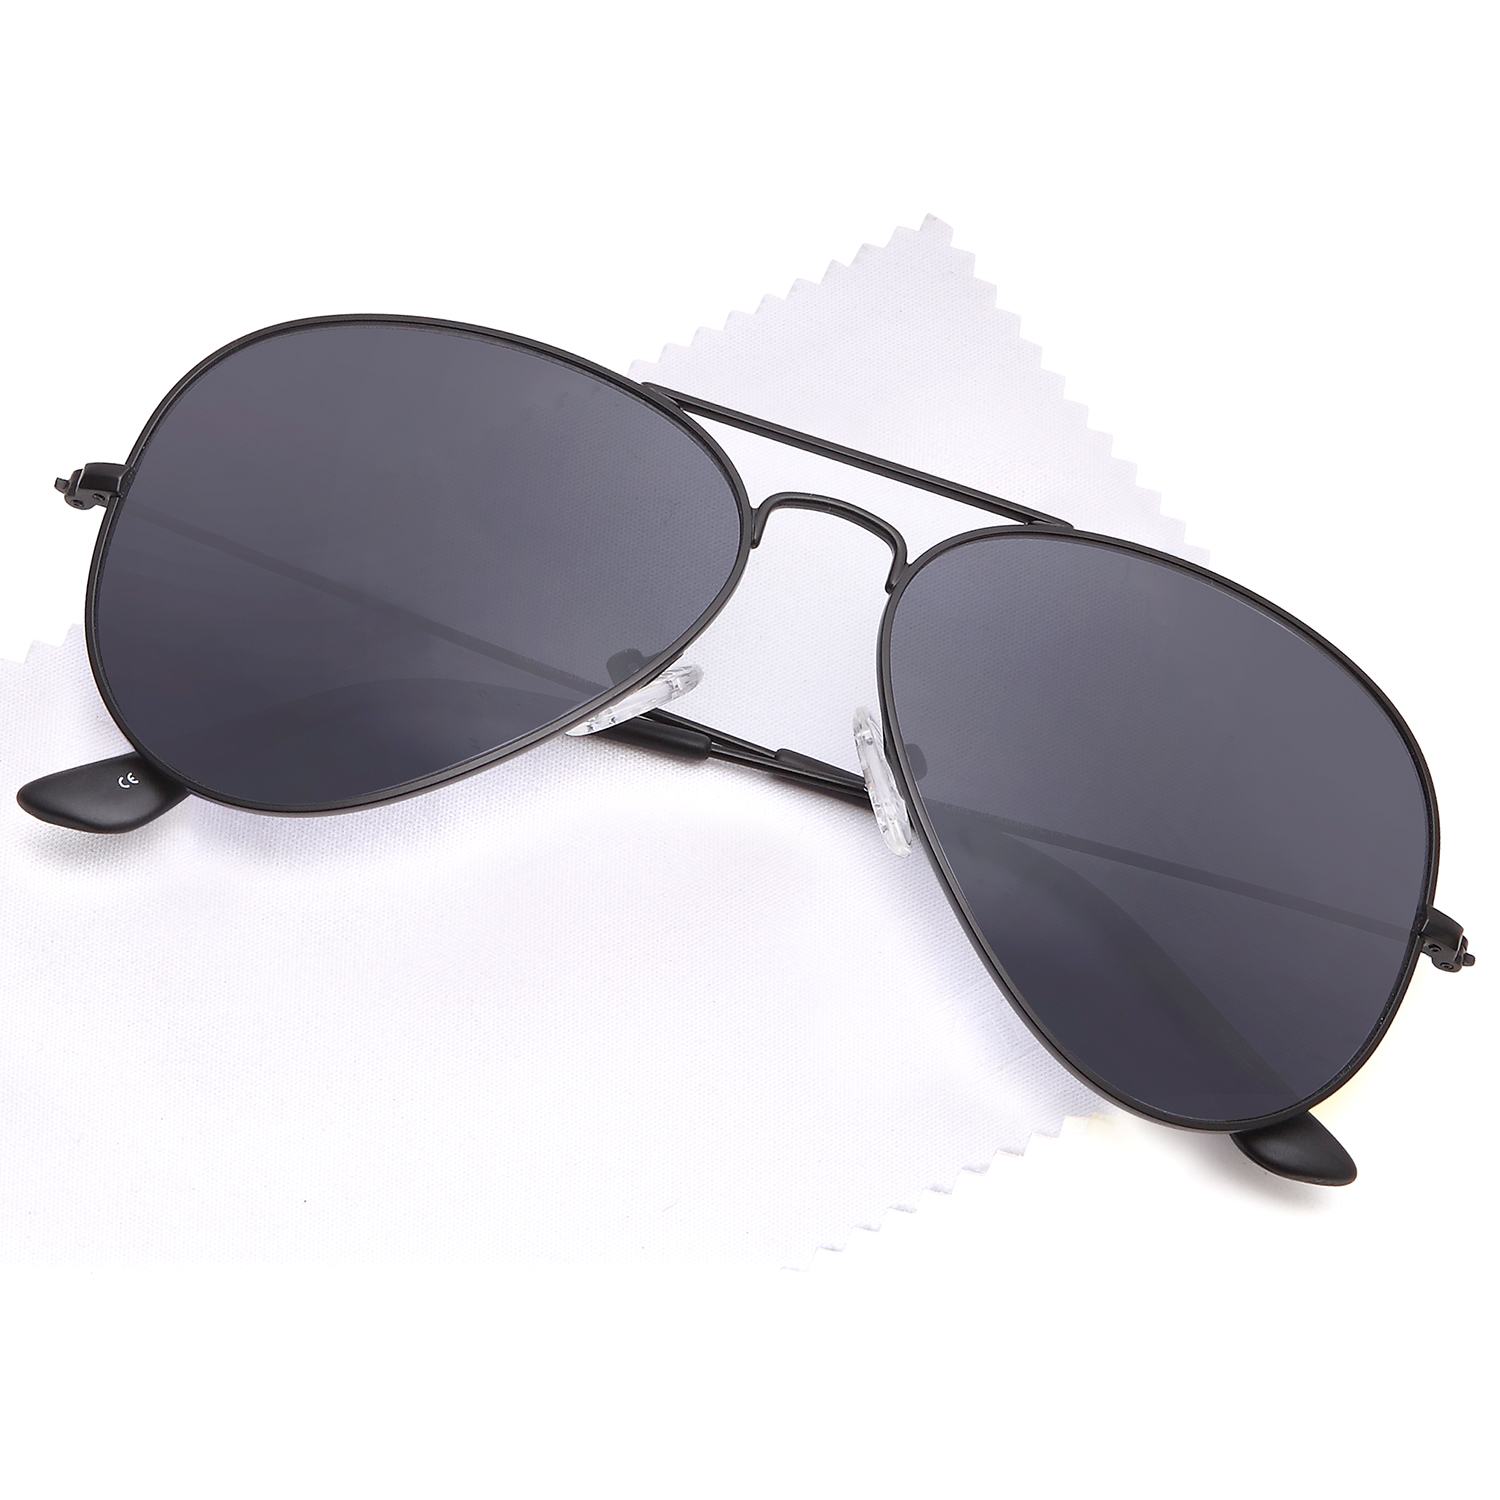 JETPAL Premium Classic Aviator Sunglasses w Flash Mirror and Polarized Lens Options UV400 (Non Polarized Grey Lens Black Frame) - image 1 of 2